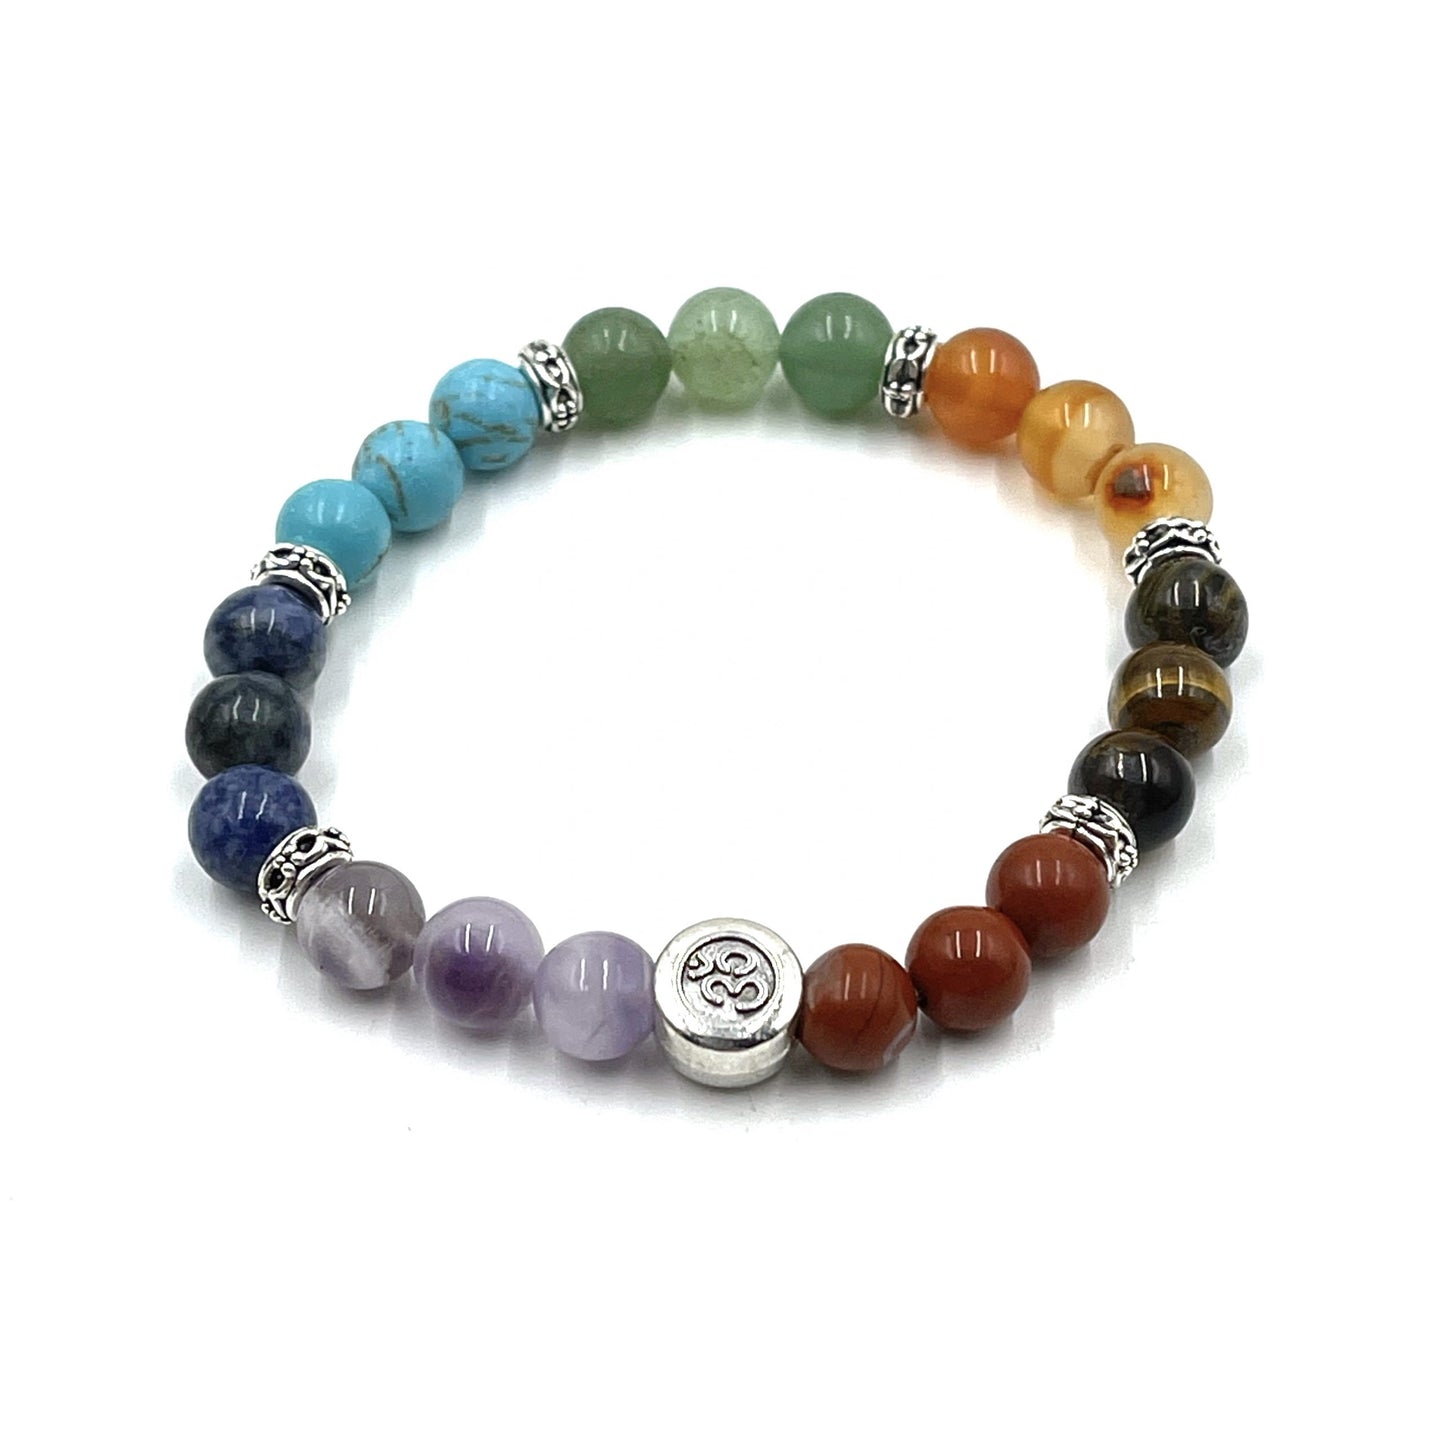 Chakra Stone Bracelet with Ohm Bead- includes Chakra Tumbled Stones